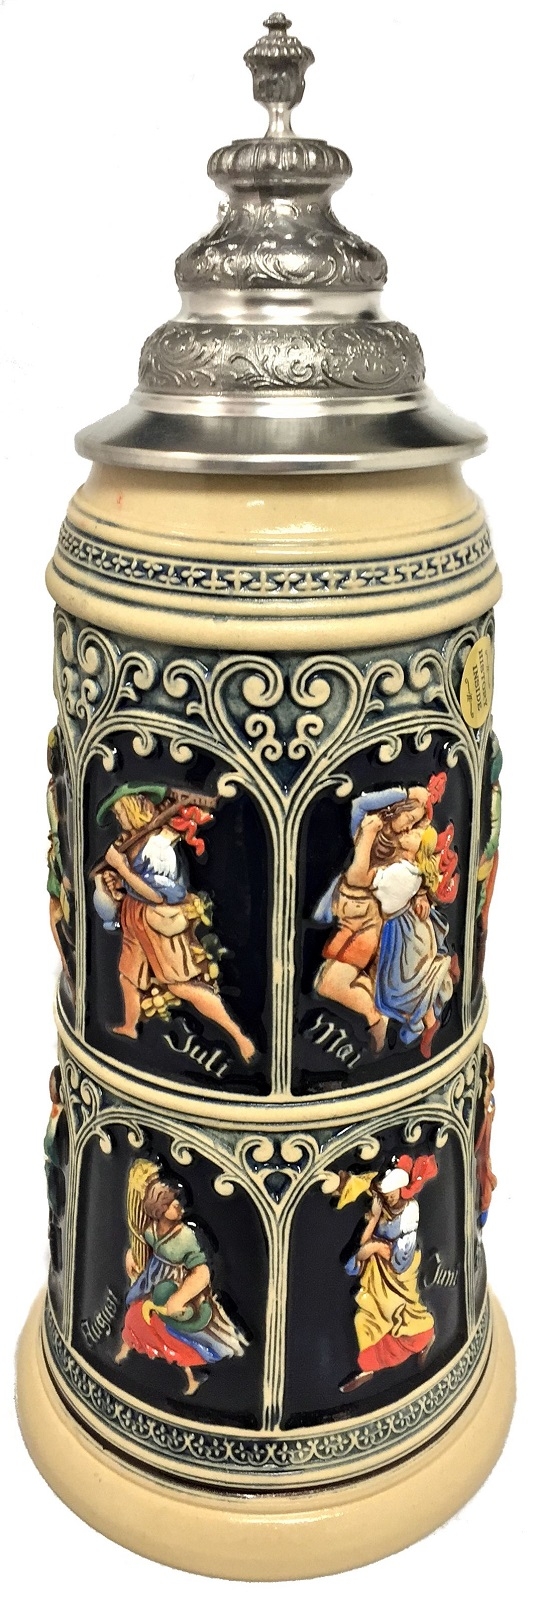 12 Medieval Months Depicted Raised Relief Limitaet LE German Beer Stein 2 L